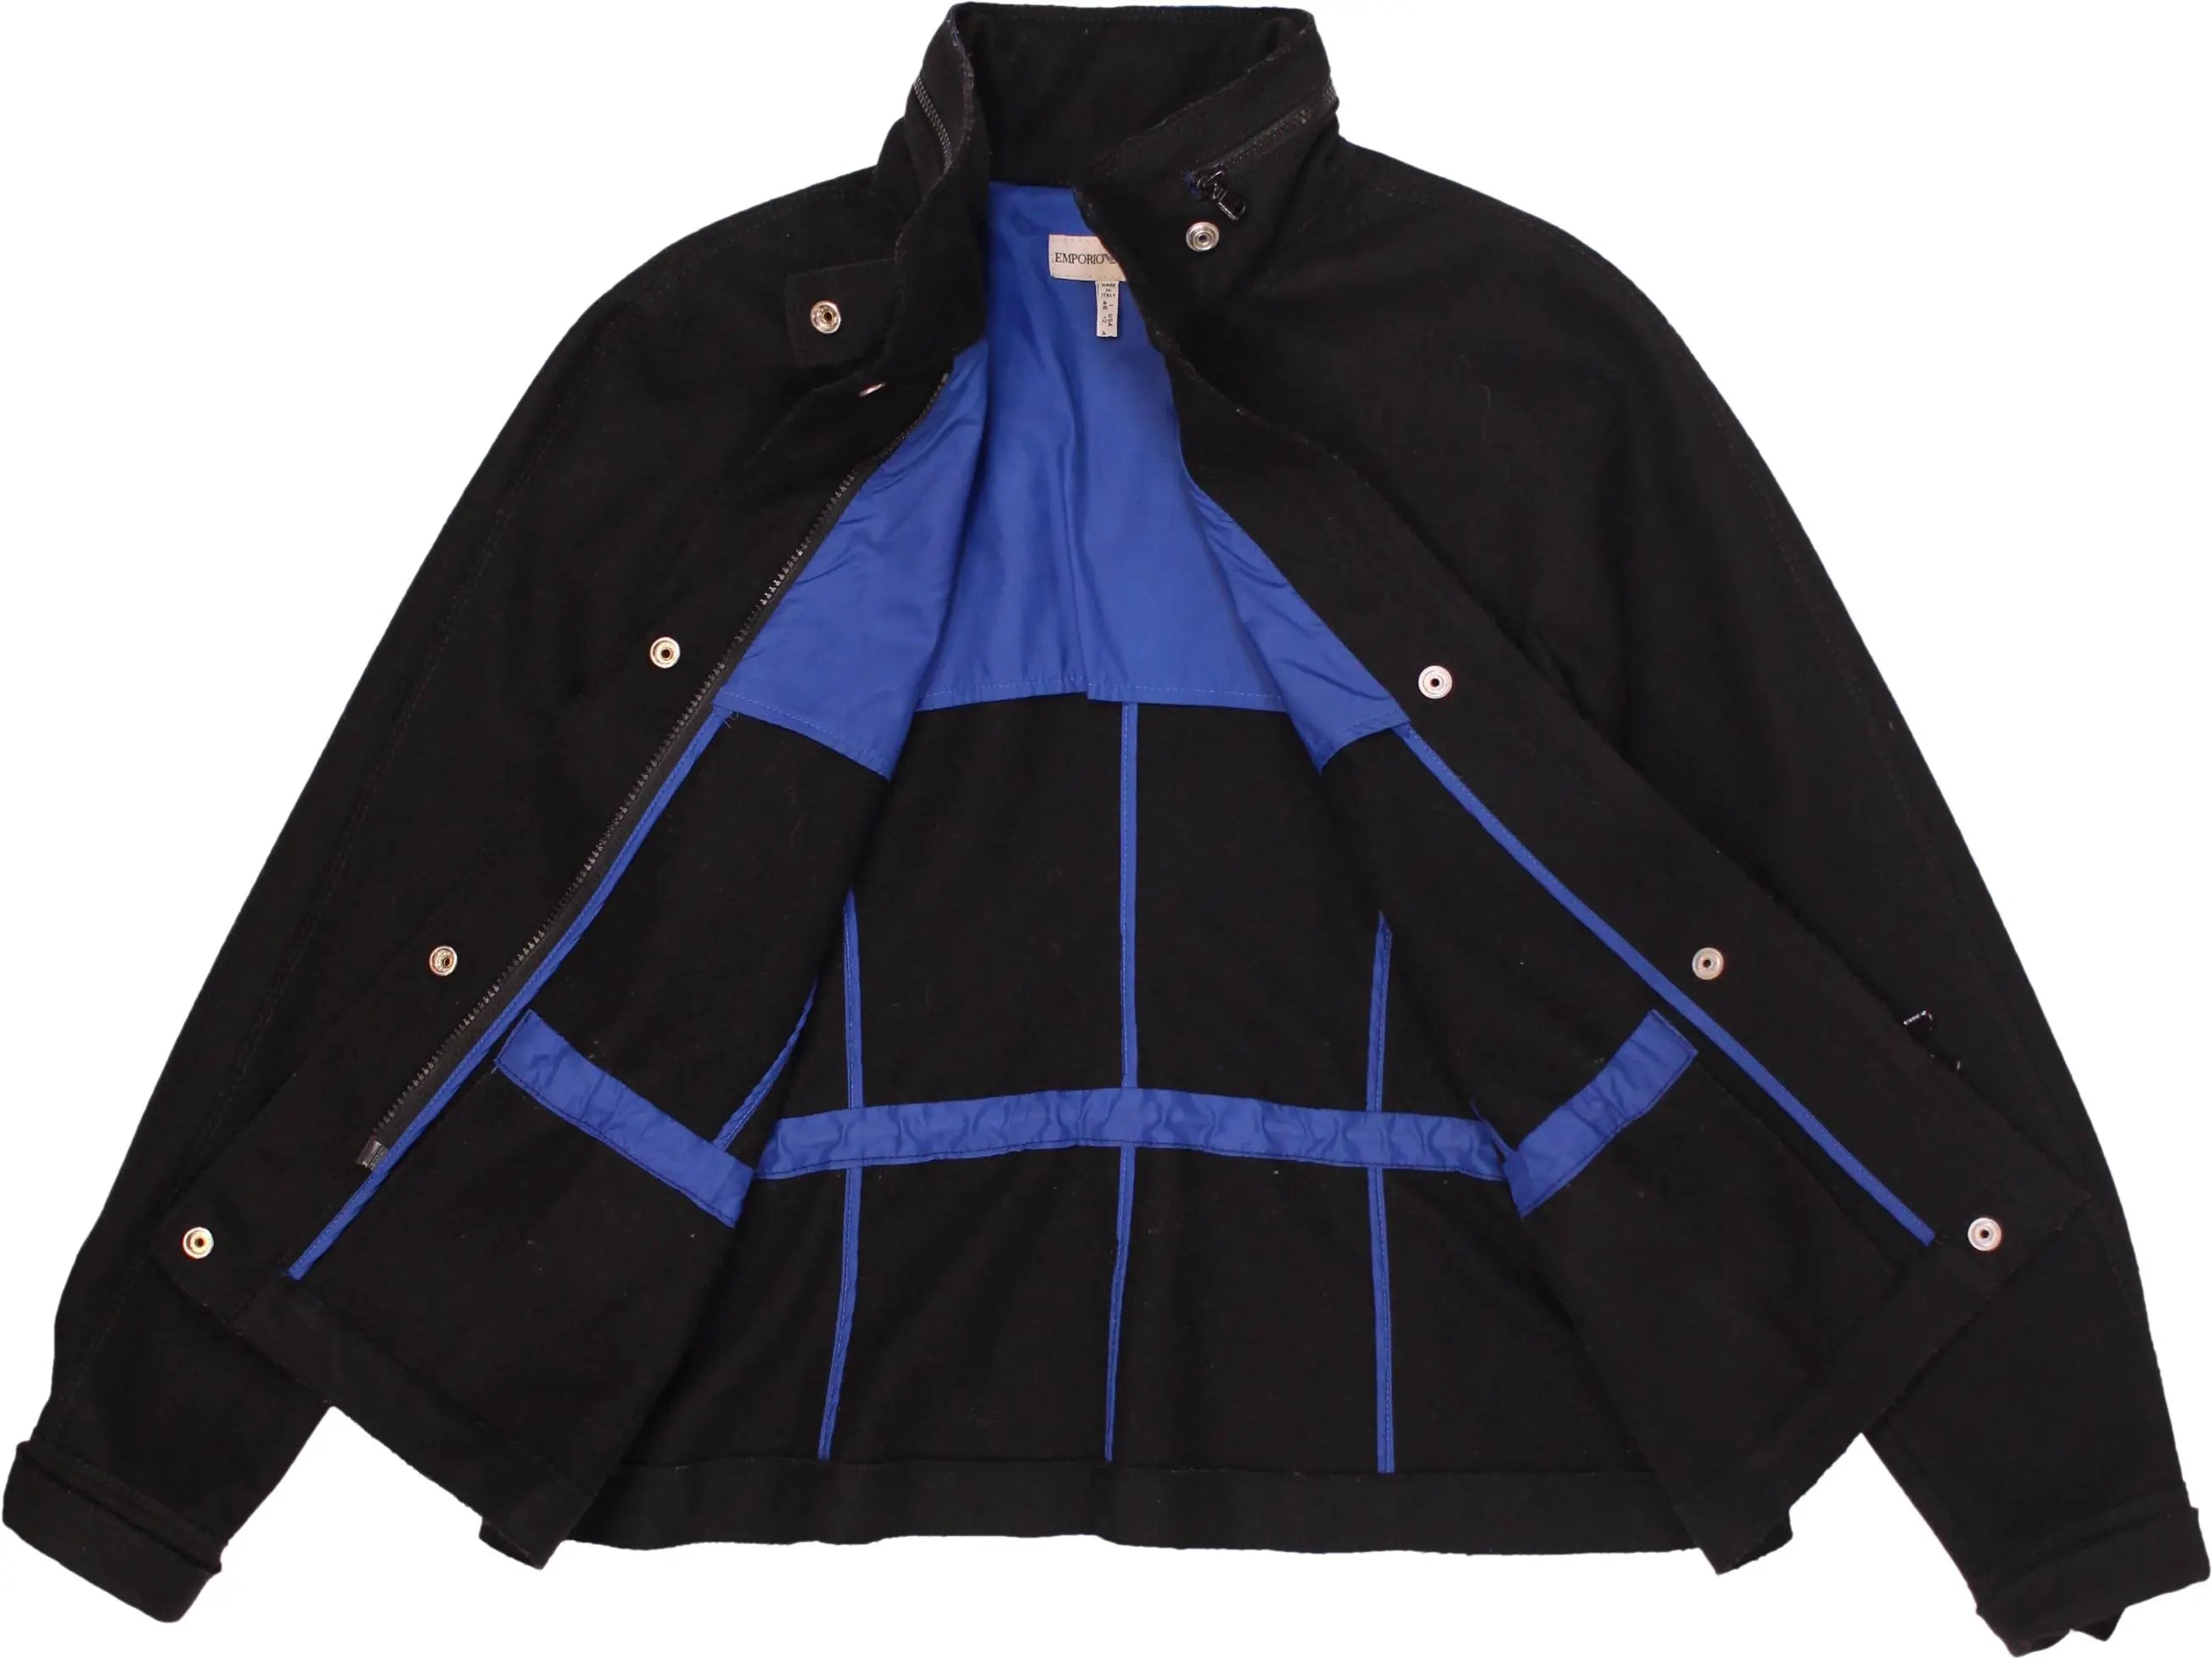 Emporio Armani - Black Wool Armani Jacket- ThriftTale.com - Vintage and second handclothing